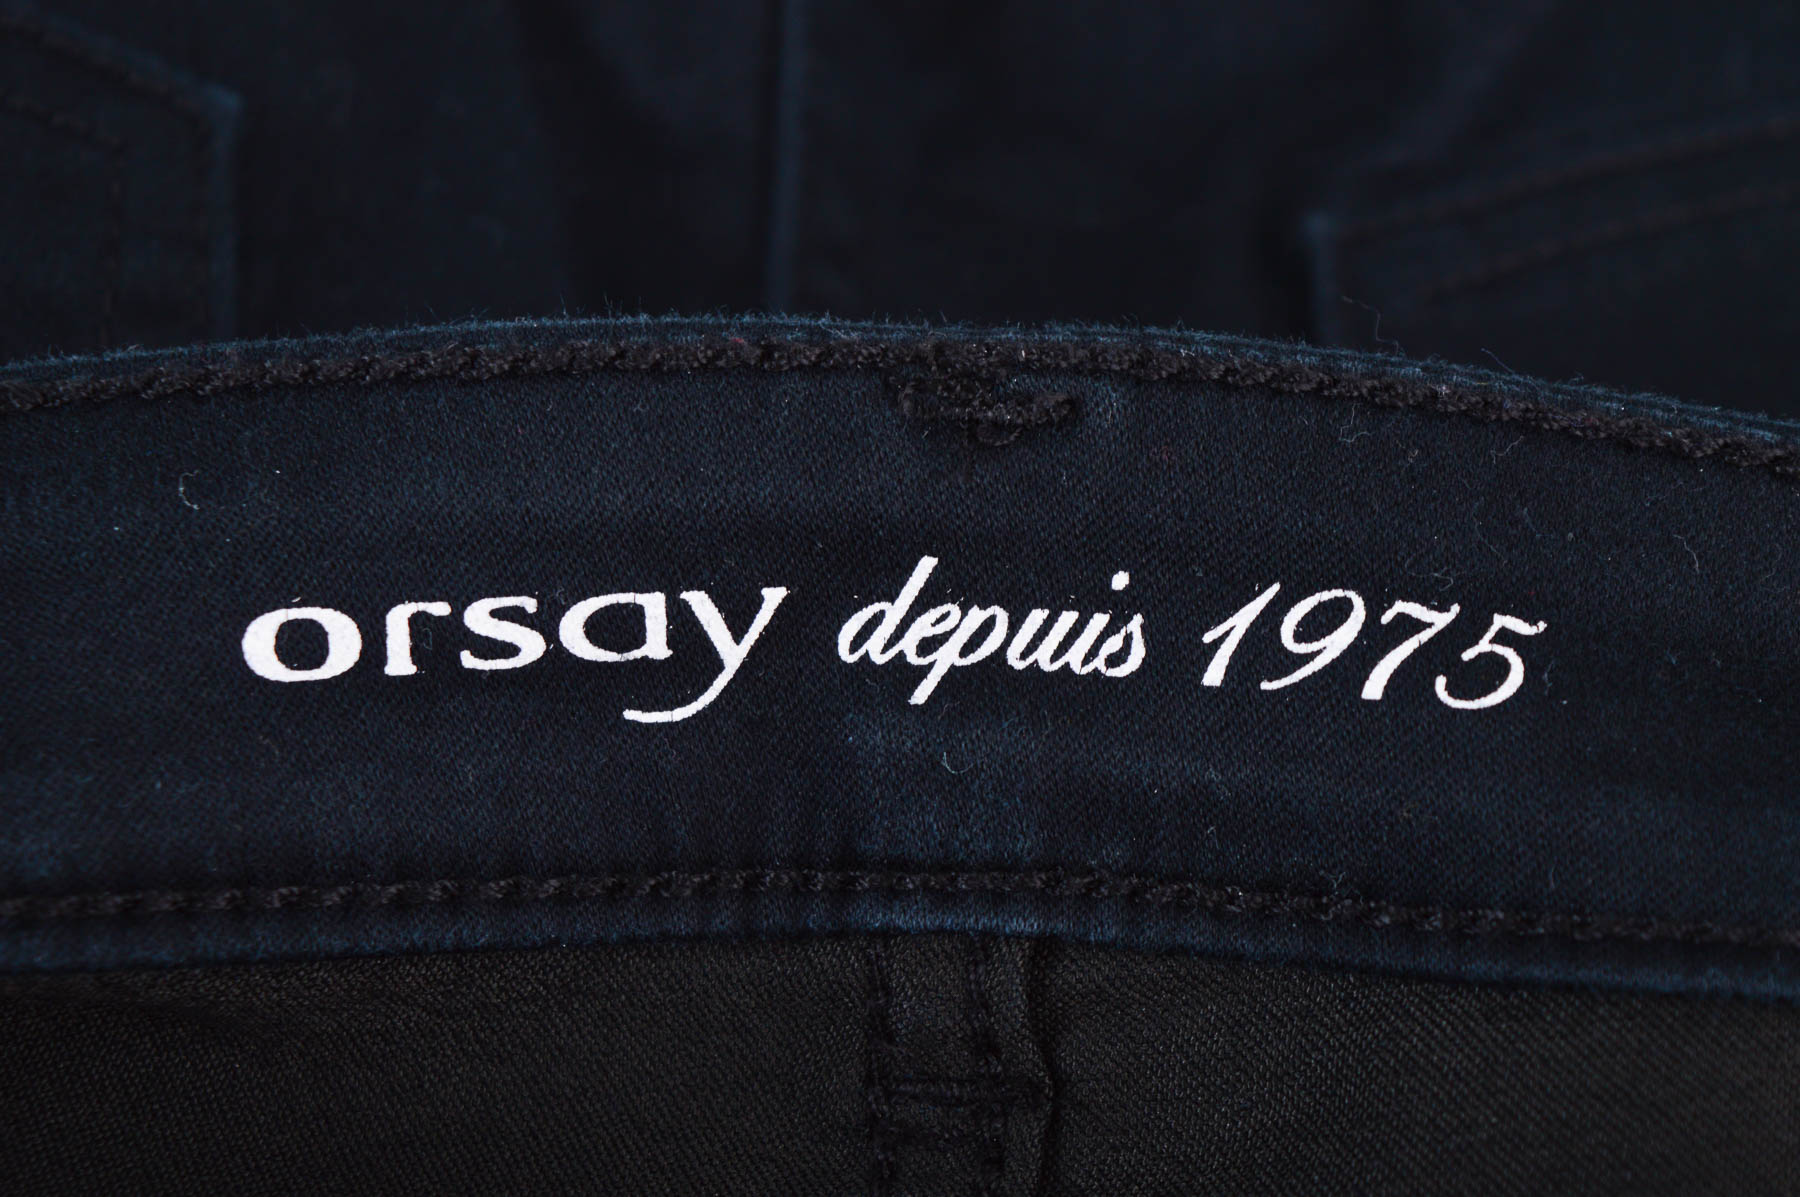 Women's trousers - Orsay - 2